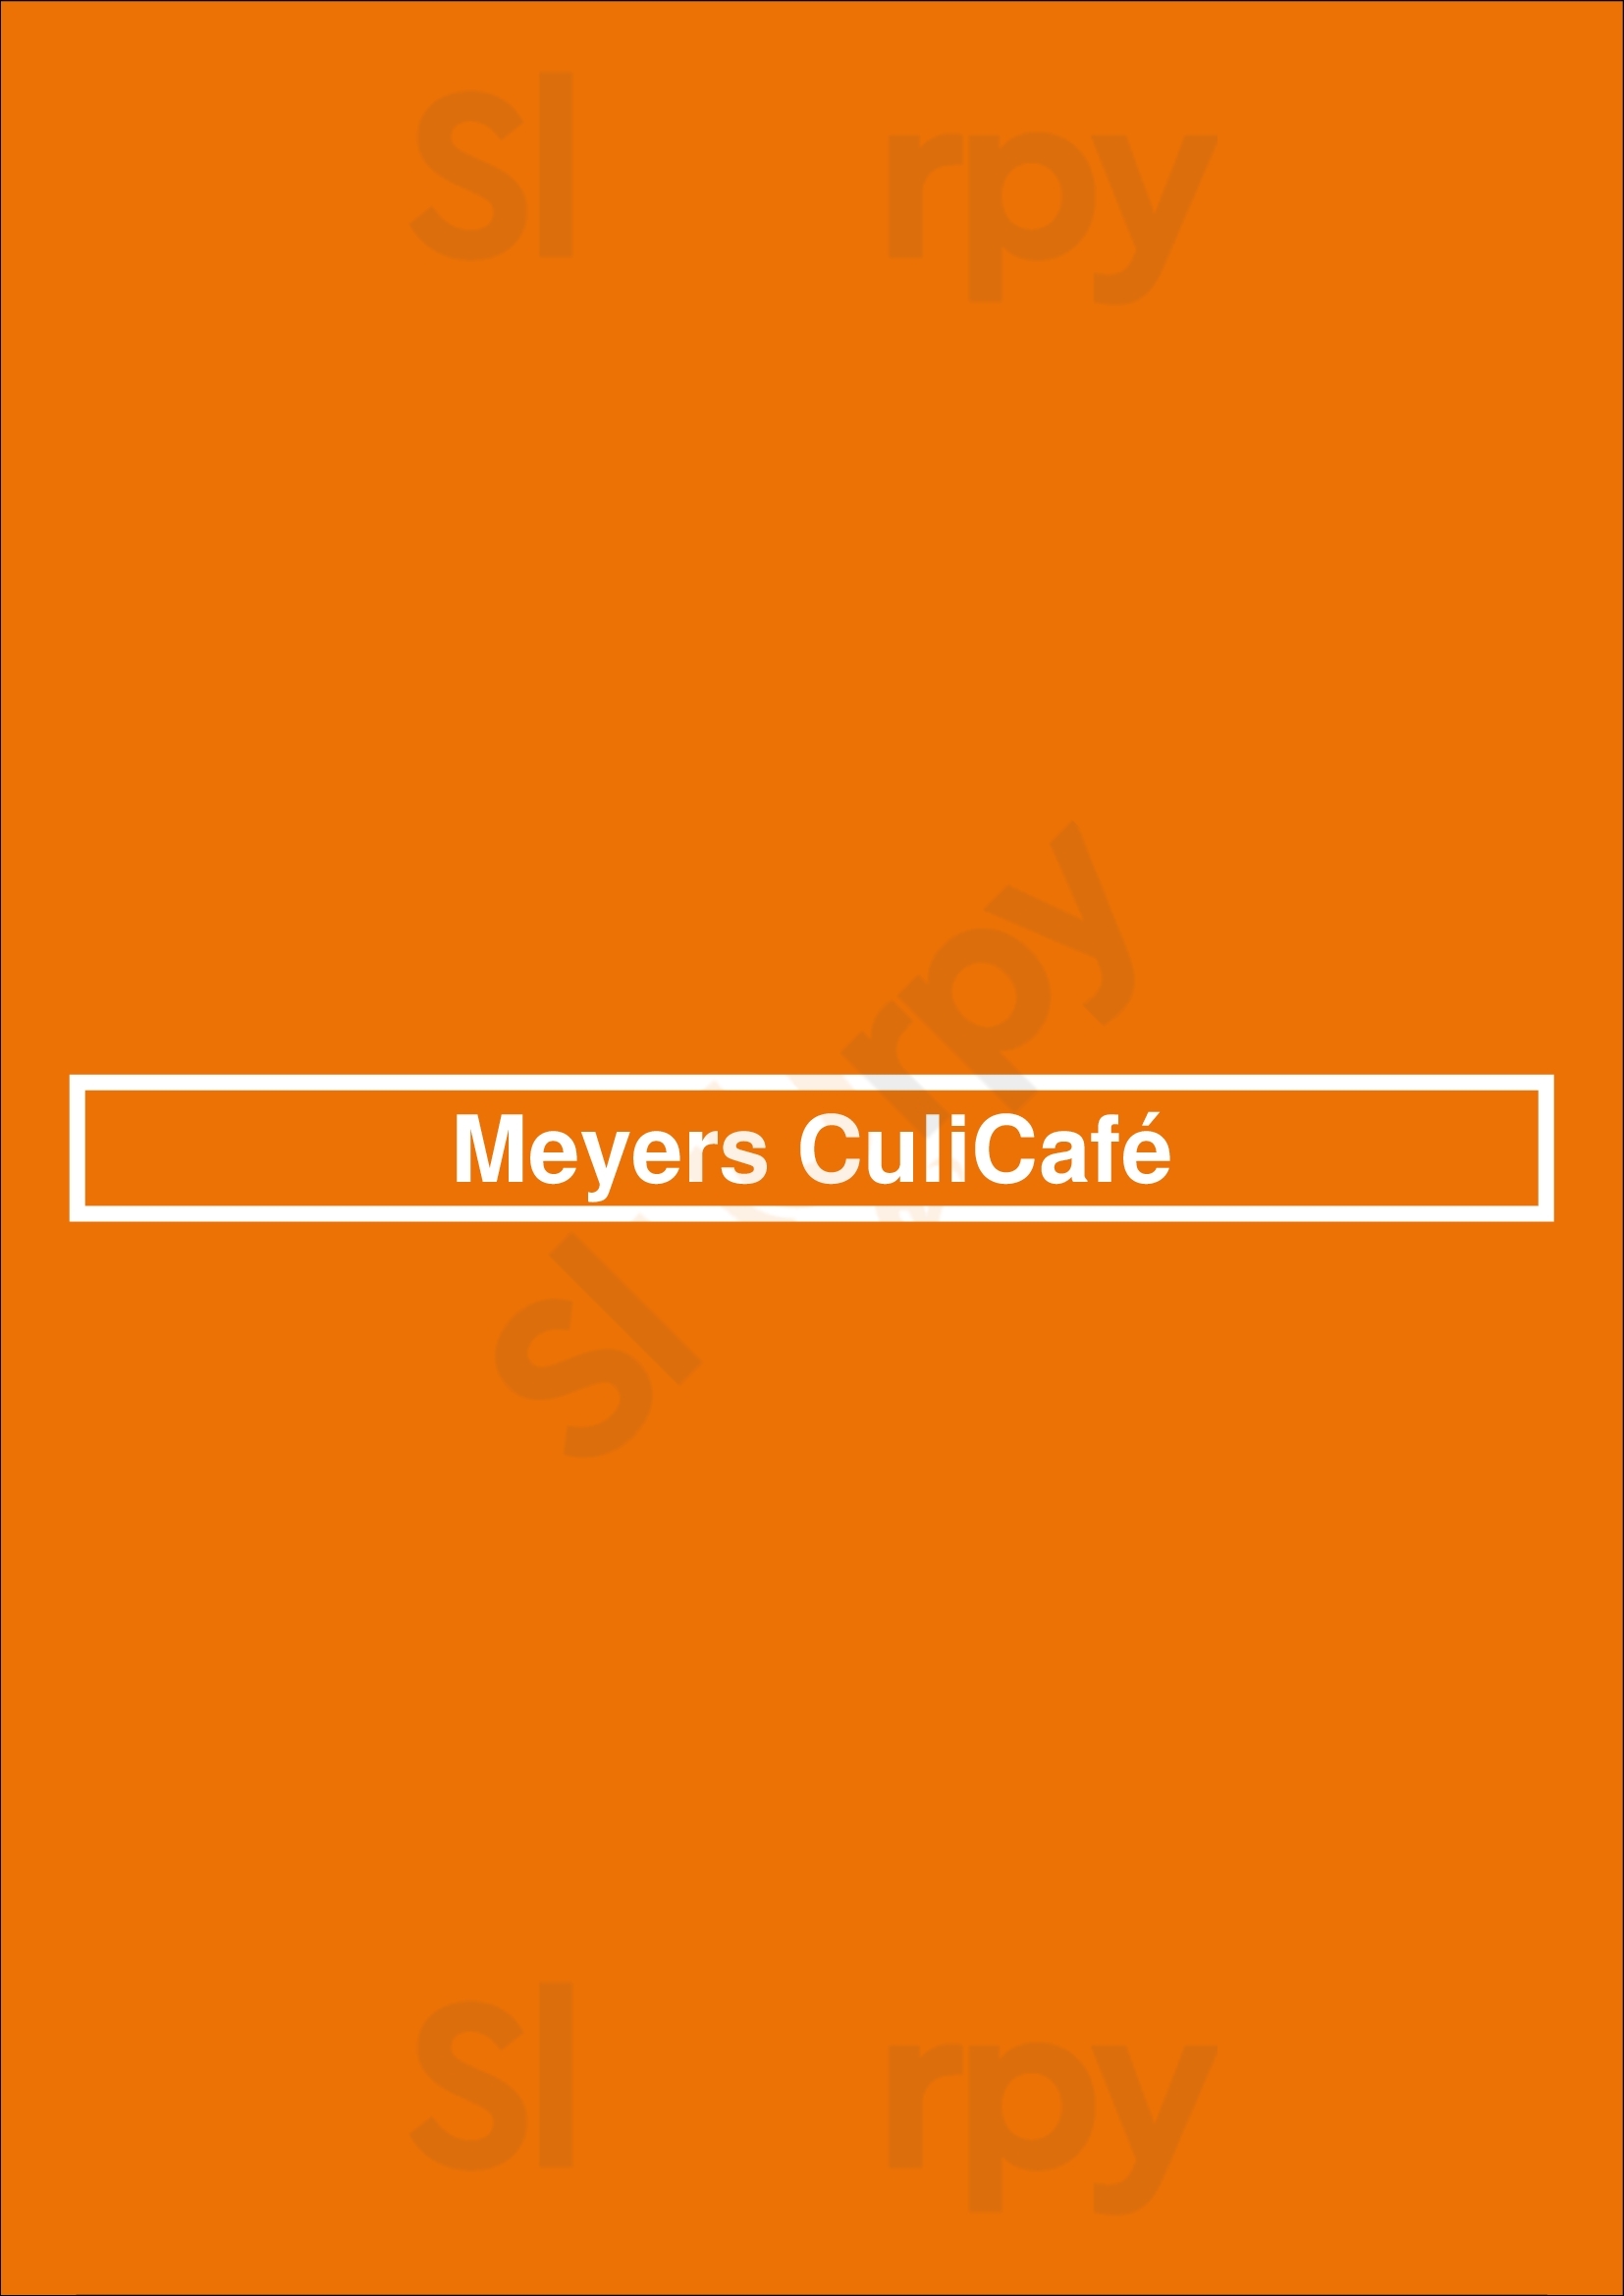 Meyers Culicafé Weesp Menu - 1